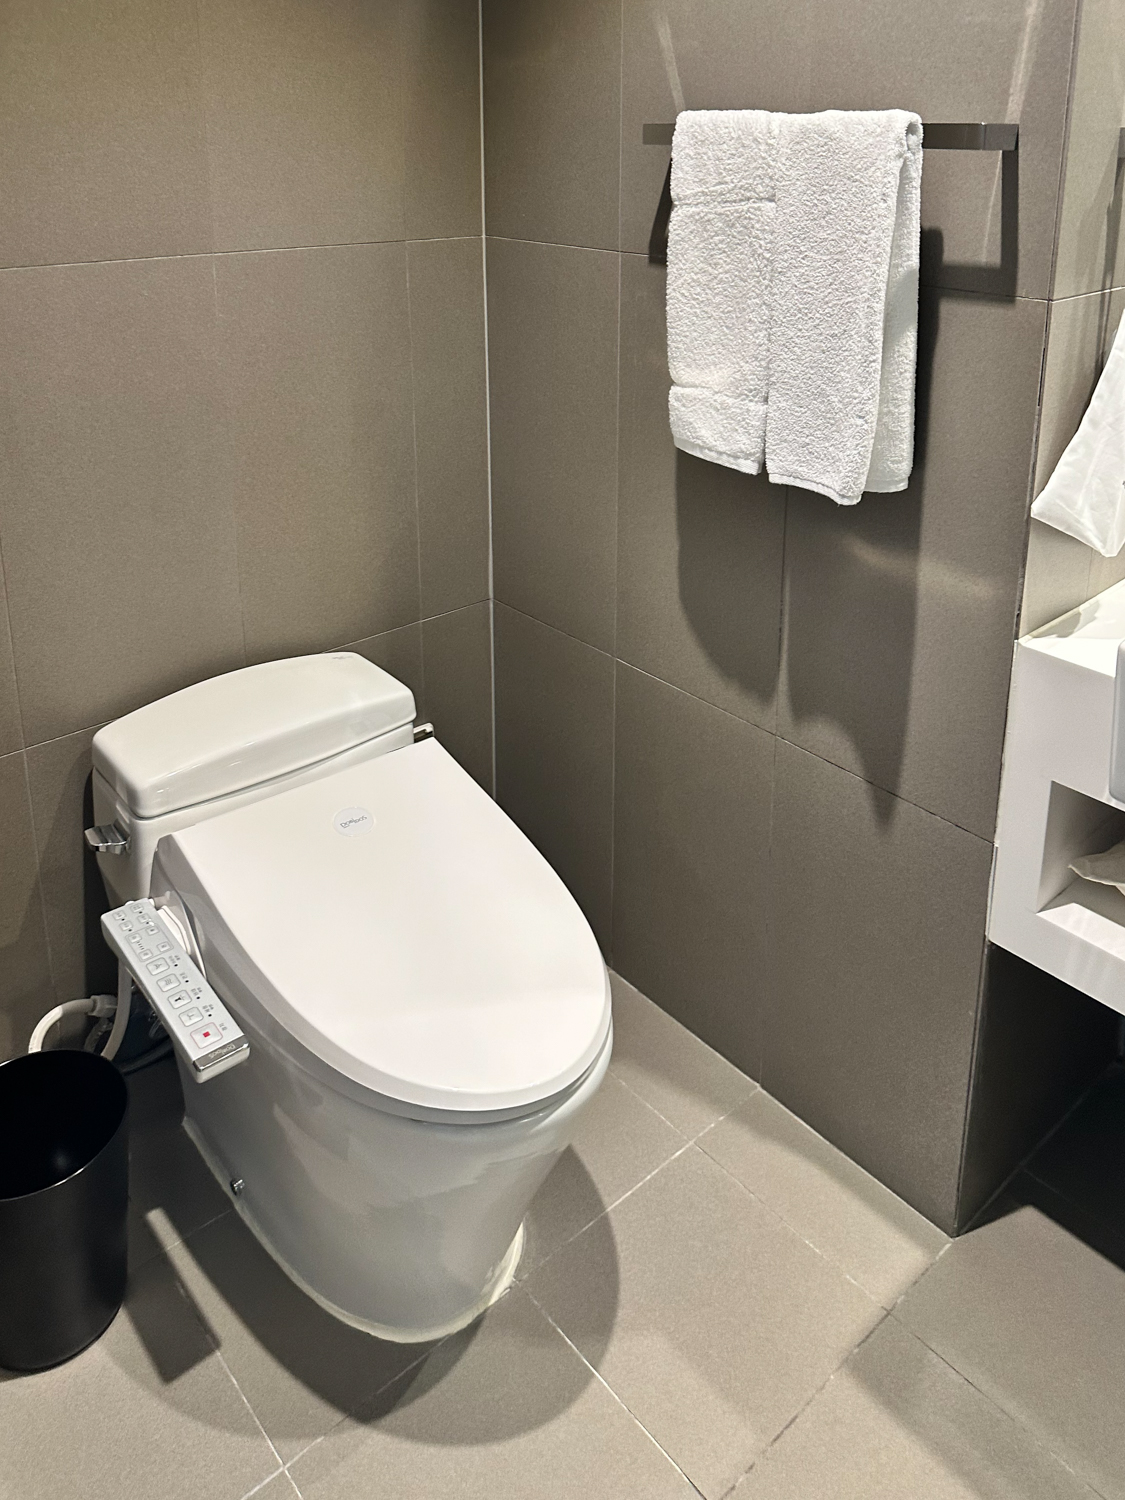 L7 홍대 호텔 객실 화장실 변기